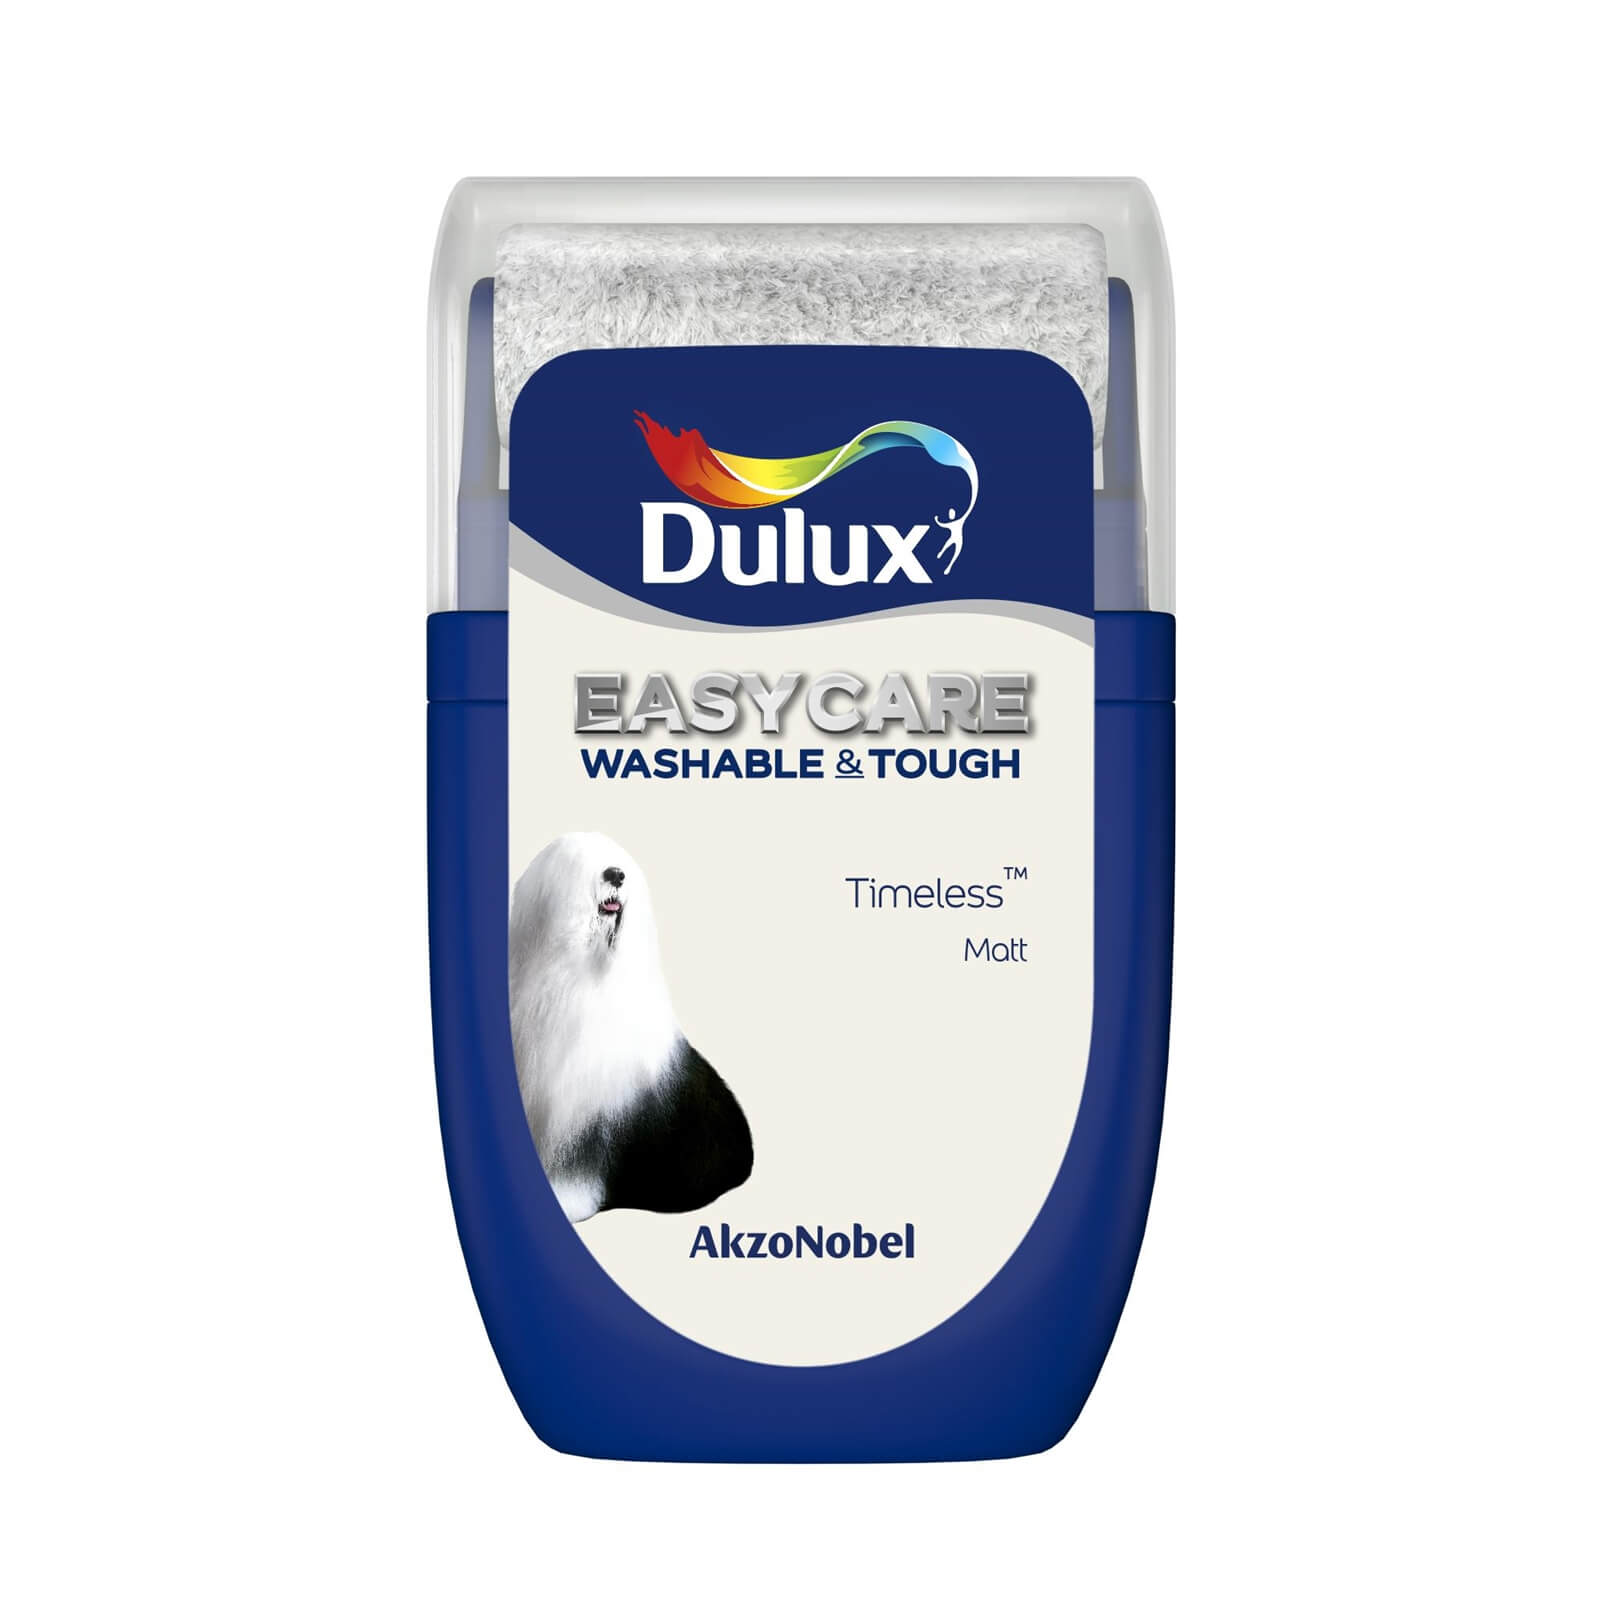 Dulux Easycare Washable & Tough Matt Paint Timeless - Tester 30ml